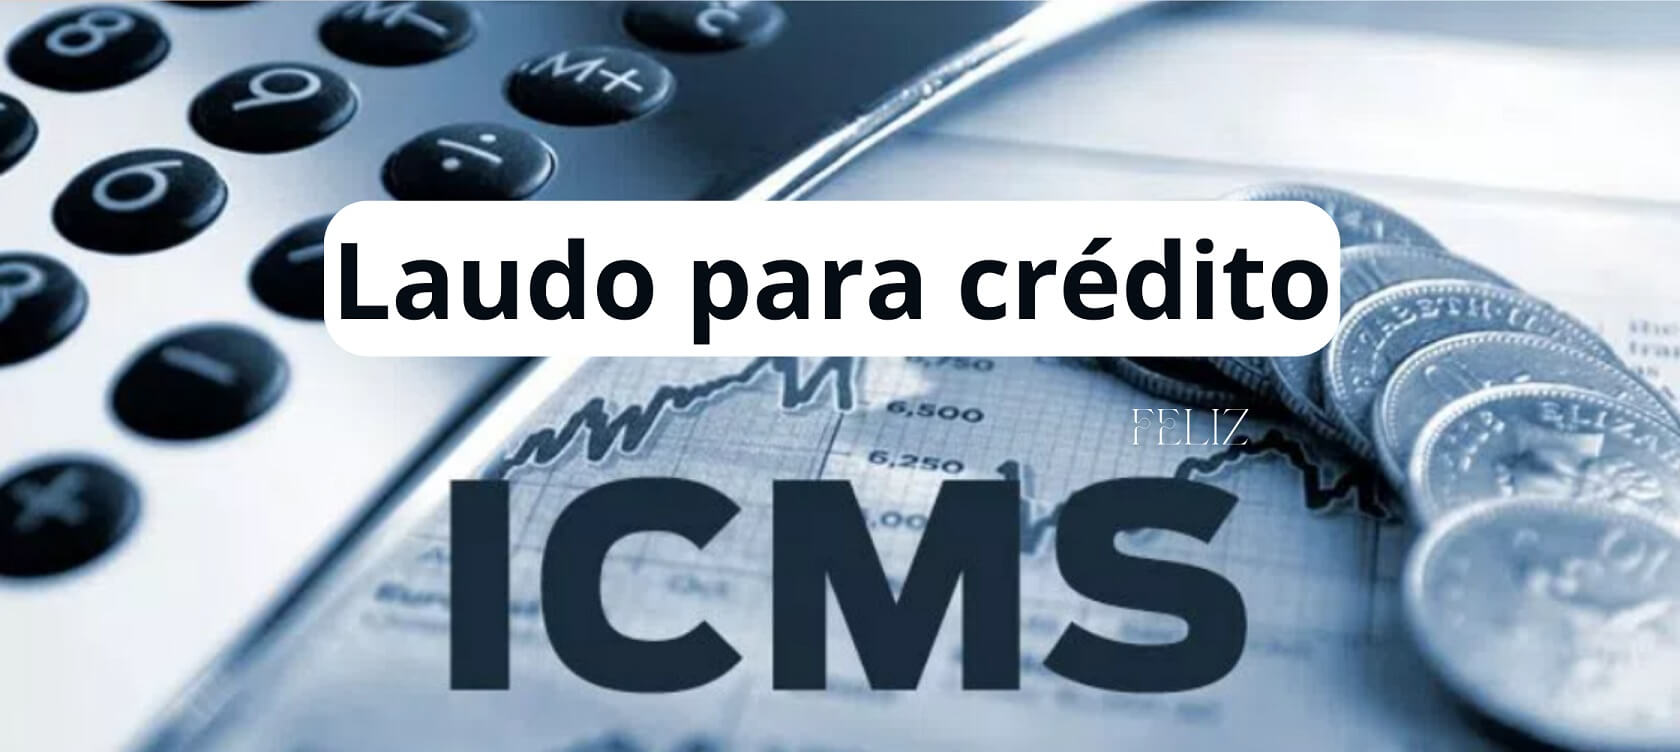 Laudo para crédito de icms